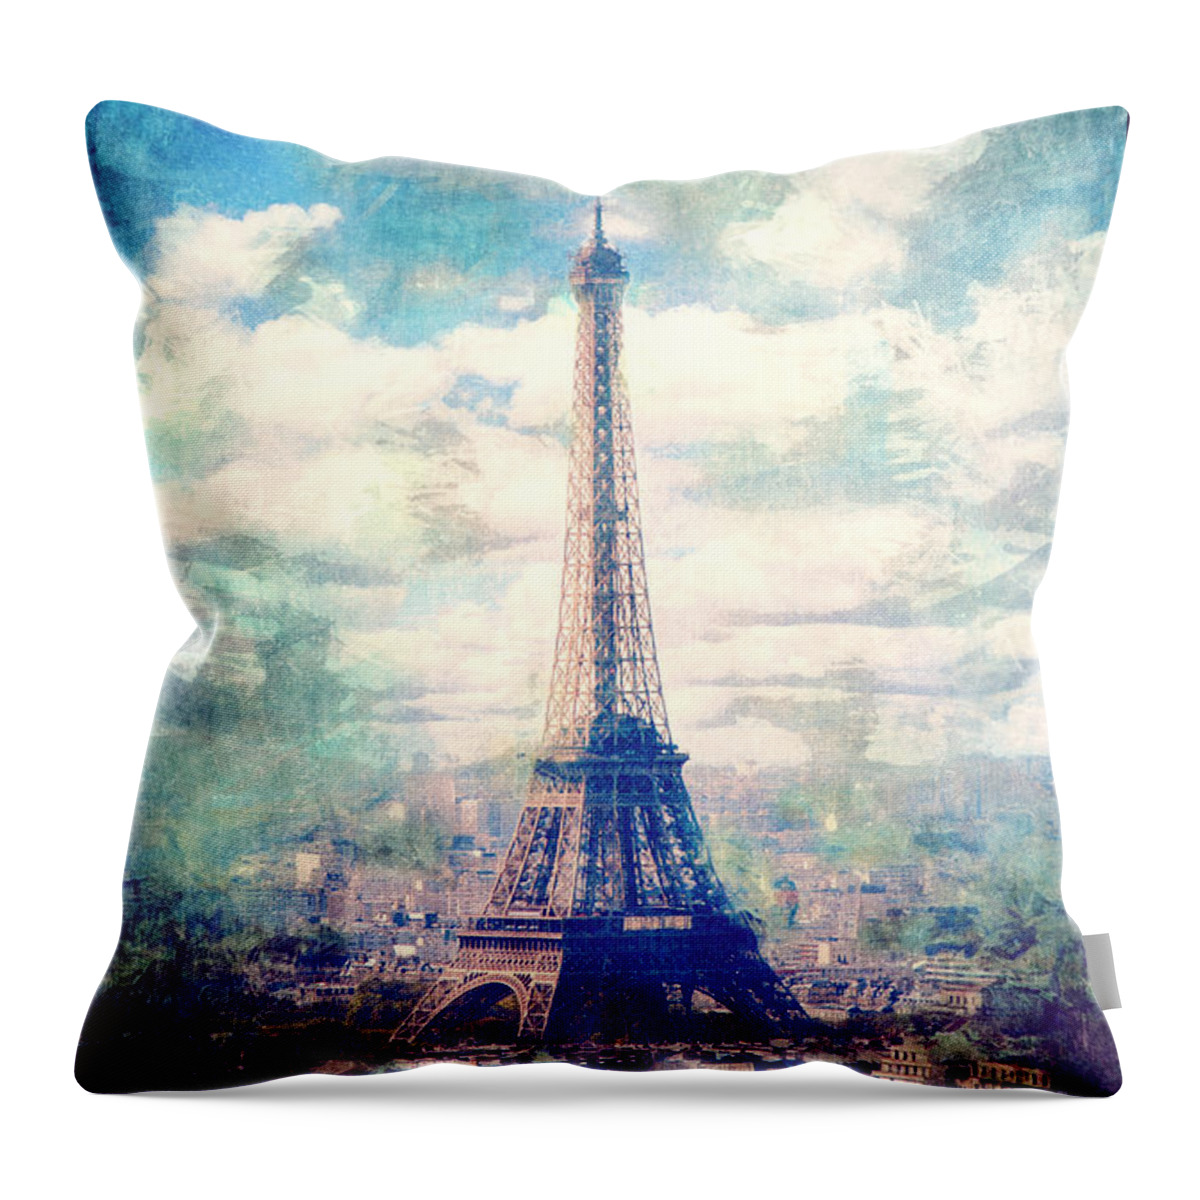 Eiffel Tower Throw Pillow featuring the digital art Eiffel Tower by Phil Perkins